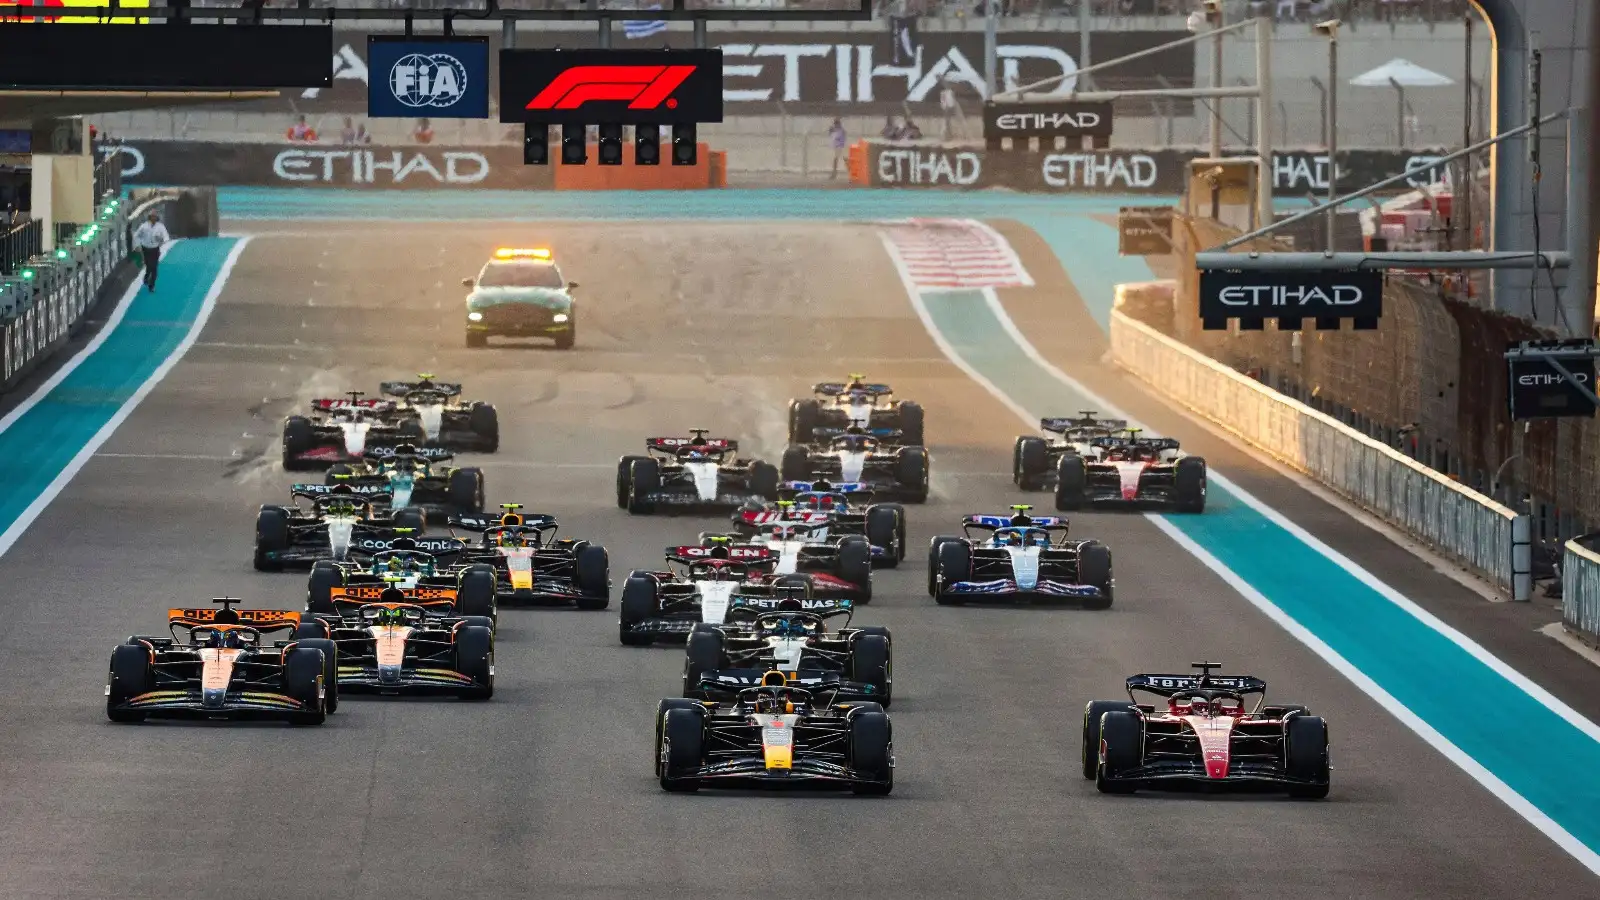 The race gets underway in Abu Dhabi.